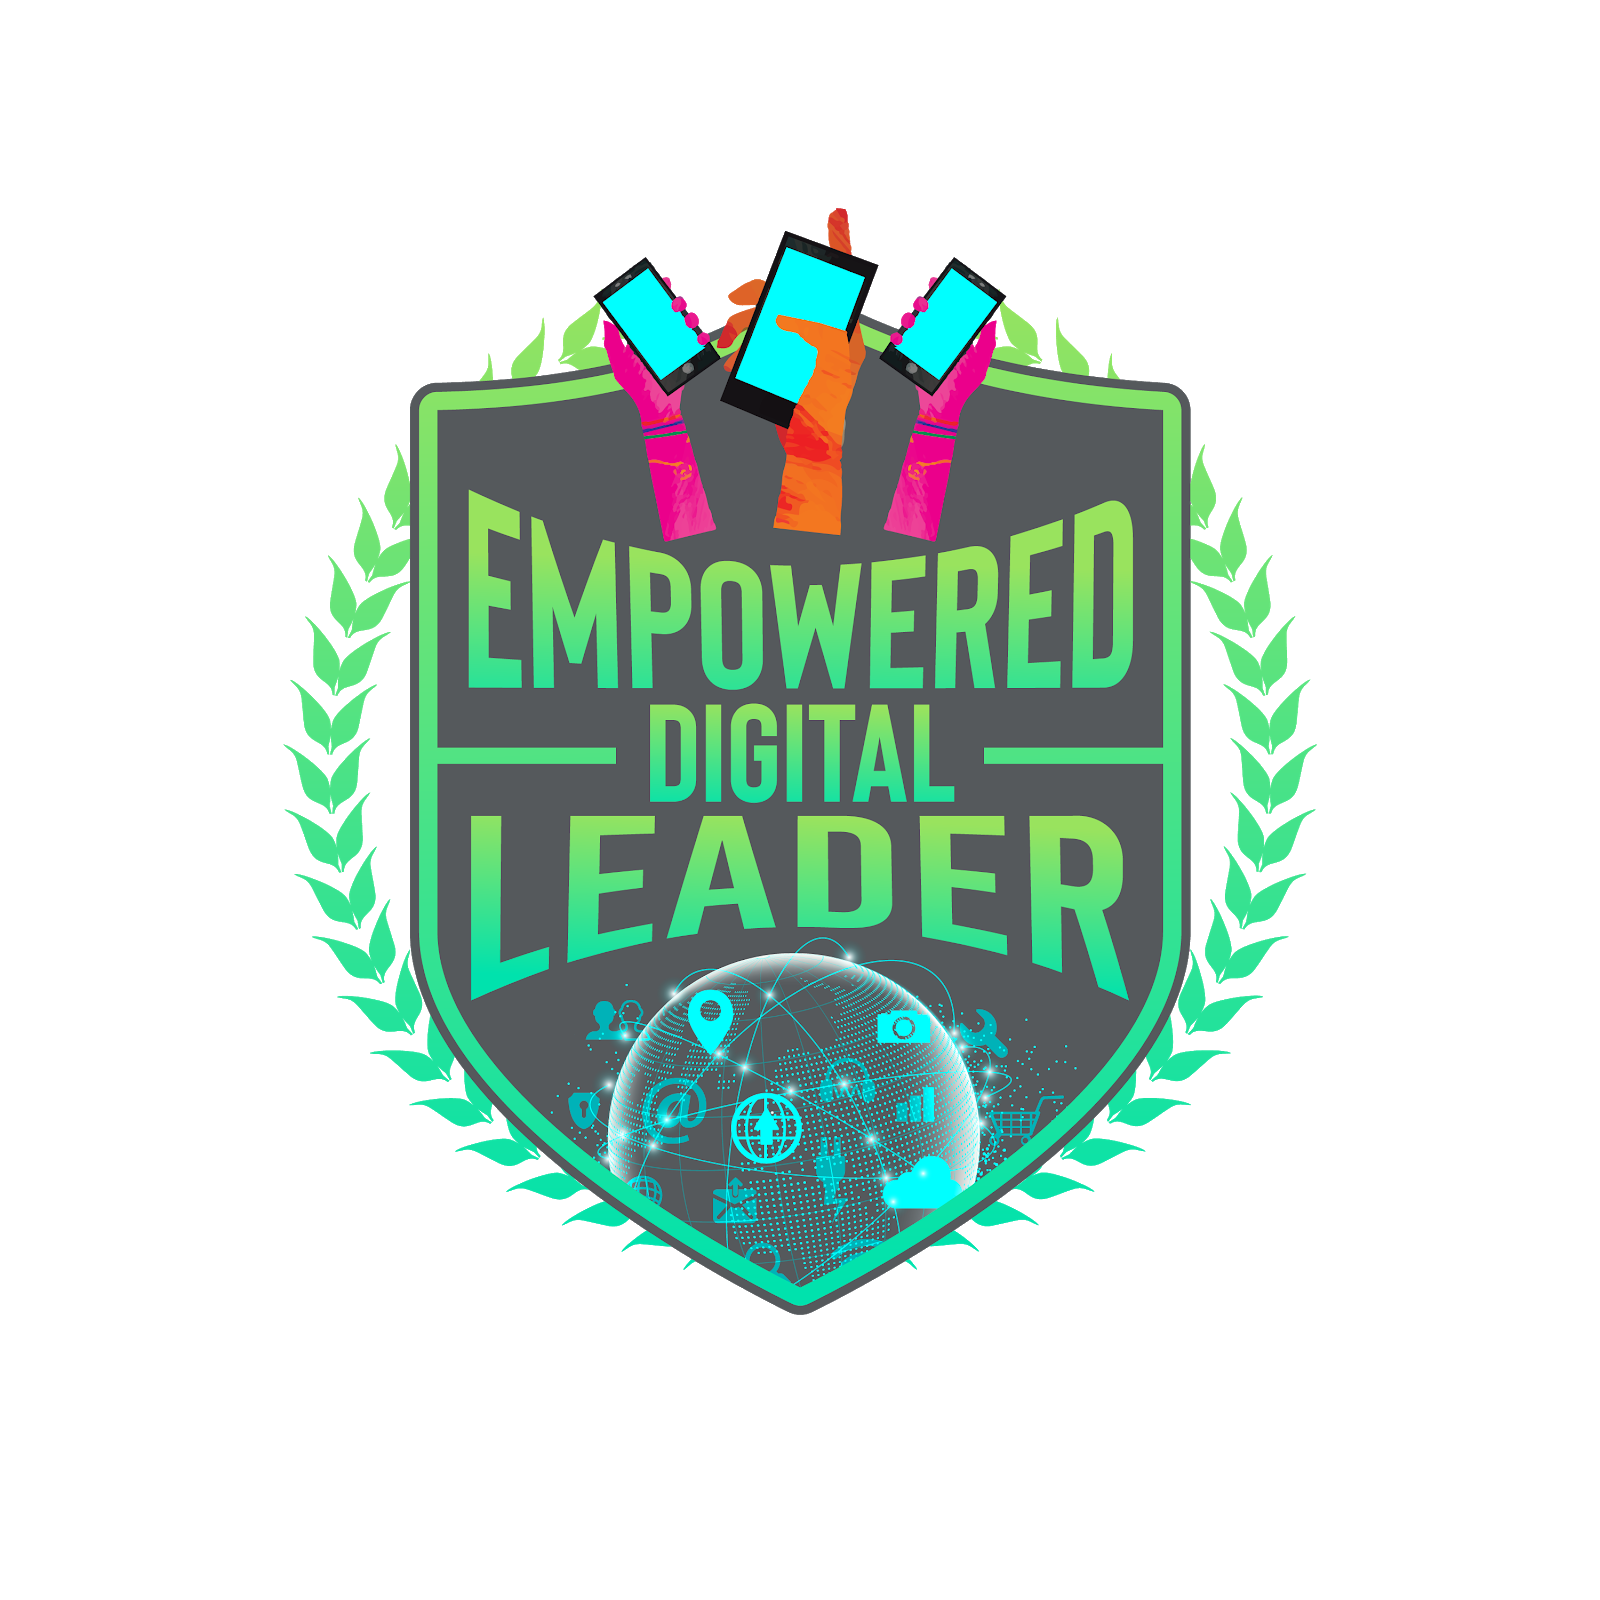 Empowered digital leader